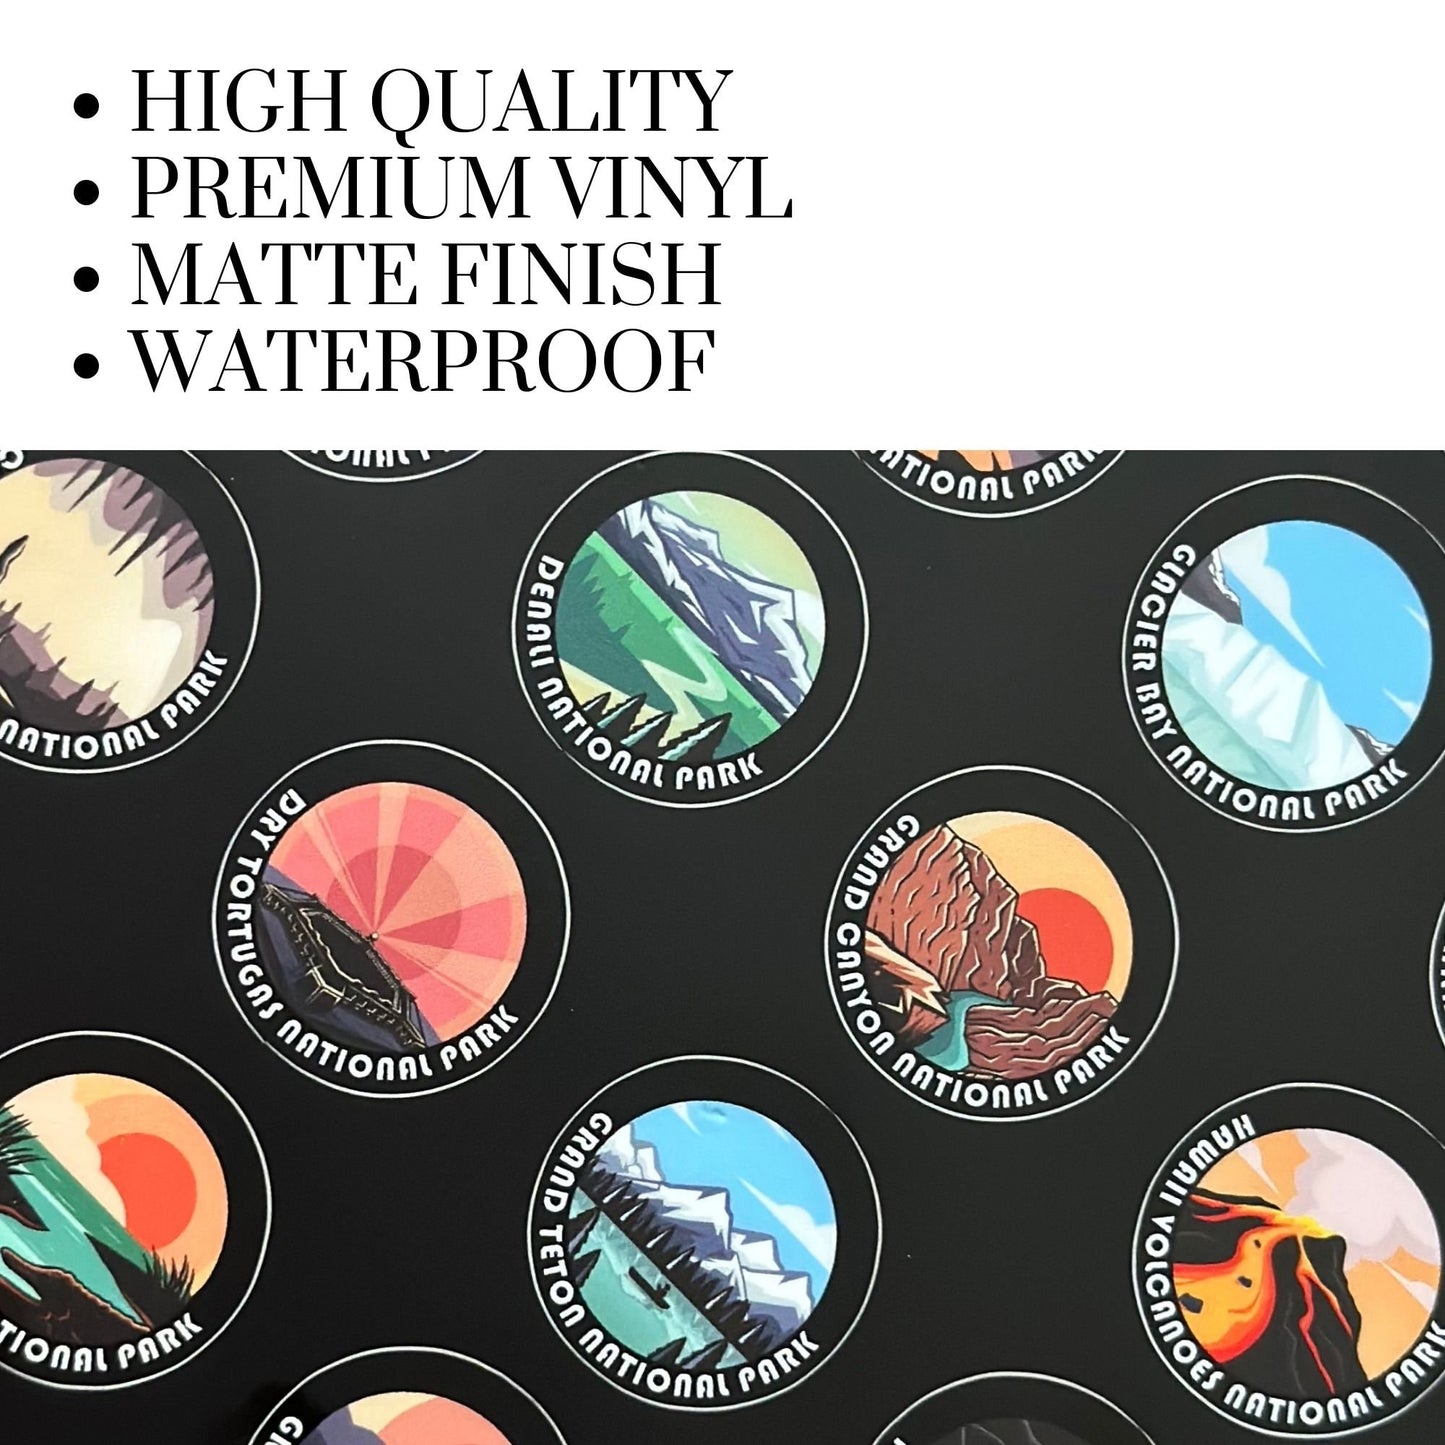 63 National Parks Sticker Sheet, National Park gift, Track your National Parks, Premium Vinyl Waterproof National Parks Stickers